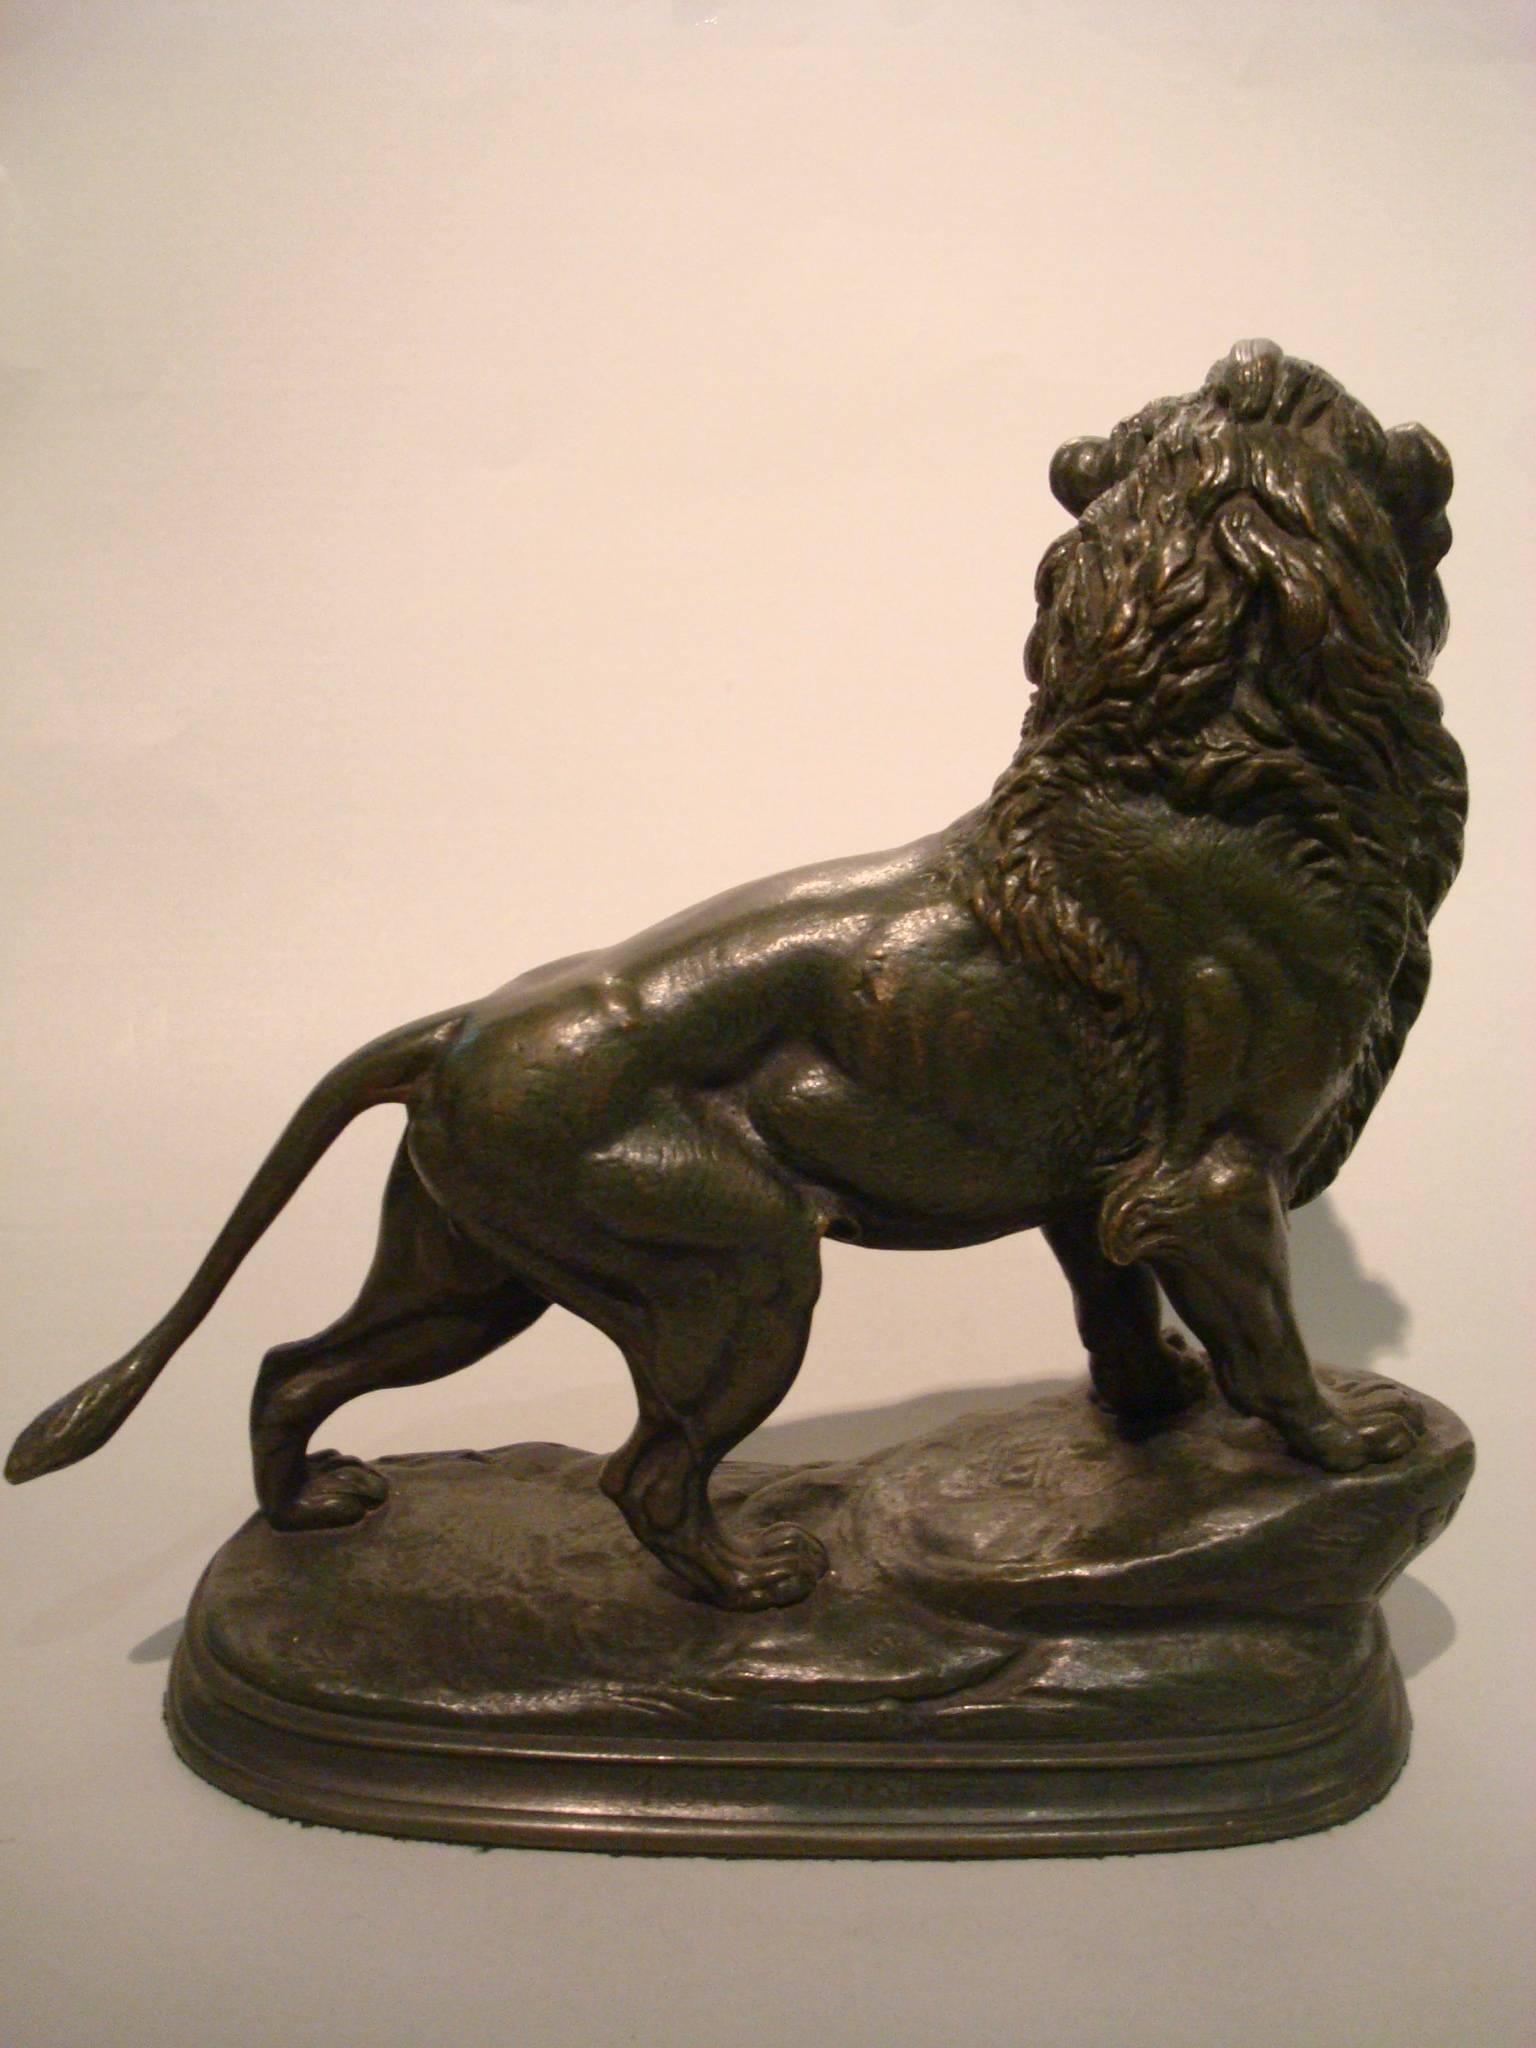 Neoclassical 19th Century Bronze Sculpture of a Roaring Lion, E. Delabrierre, France